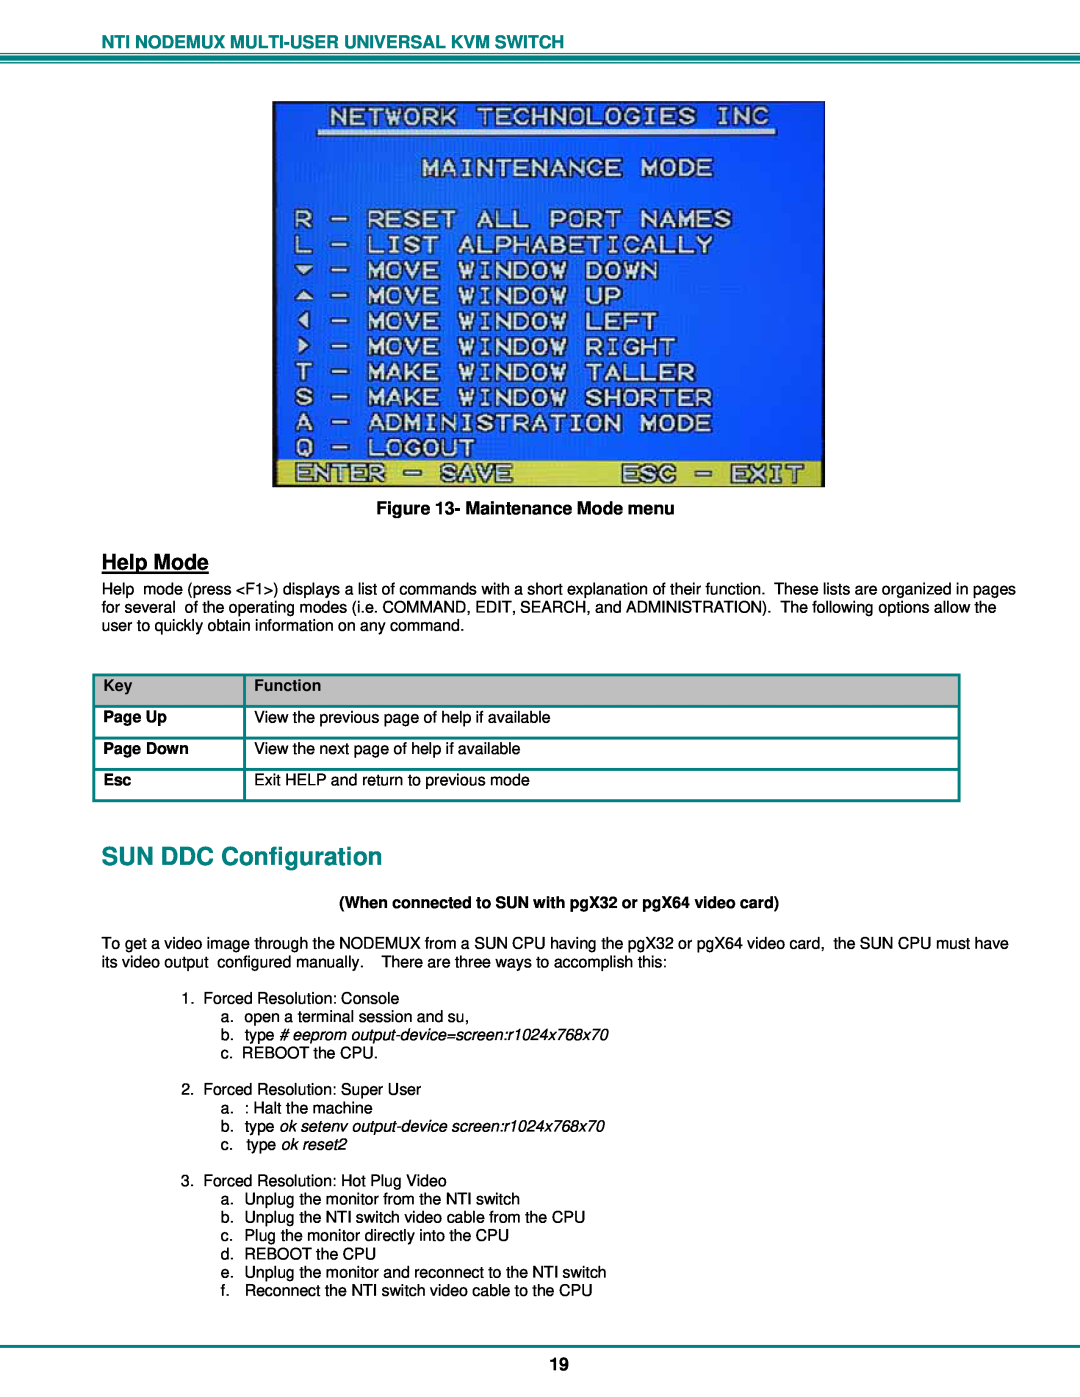 Network Technologies ST-nXm-U operation manual SUN DDC Configuration, Help Mode, Maintenance Mode menu 